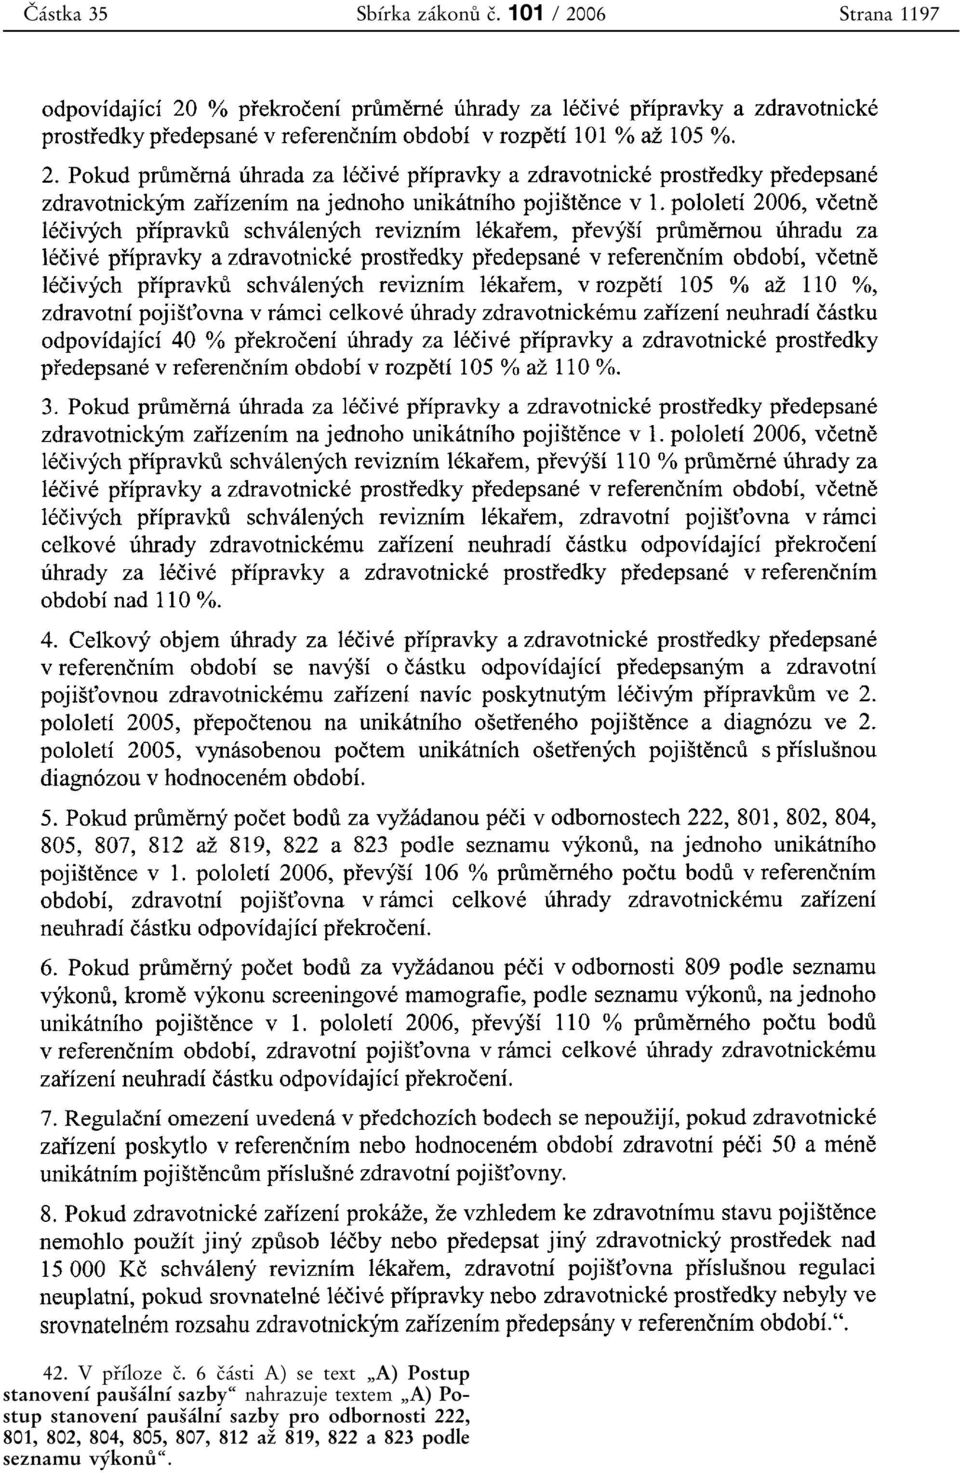 6 cοaβsti A) se text ΉA) Postup stanovenυβ pausοaβlnυβ sazbyͺ nahrazuje